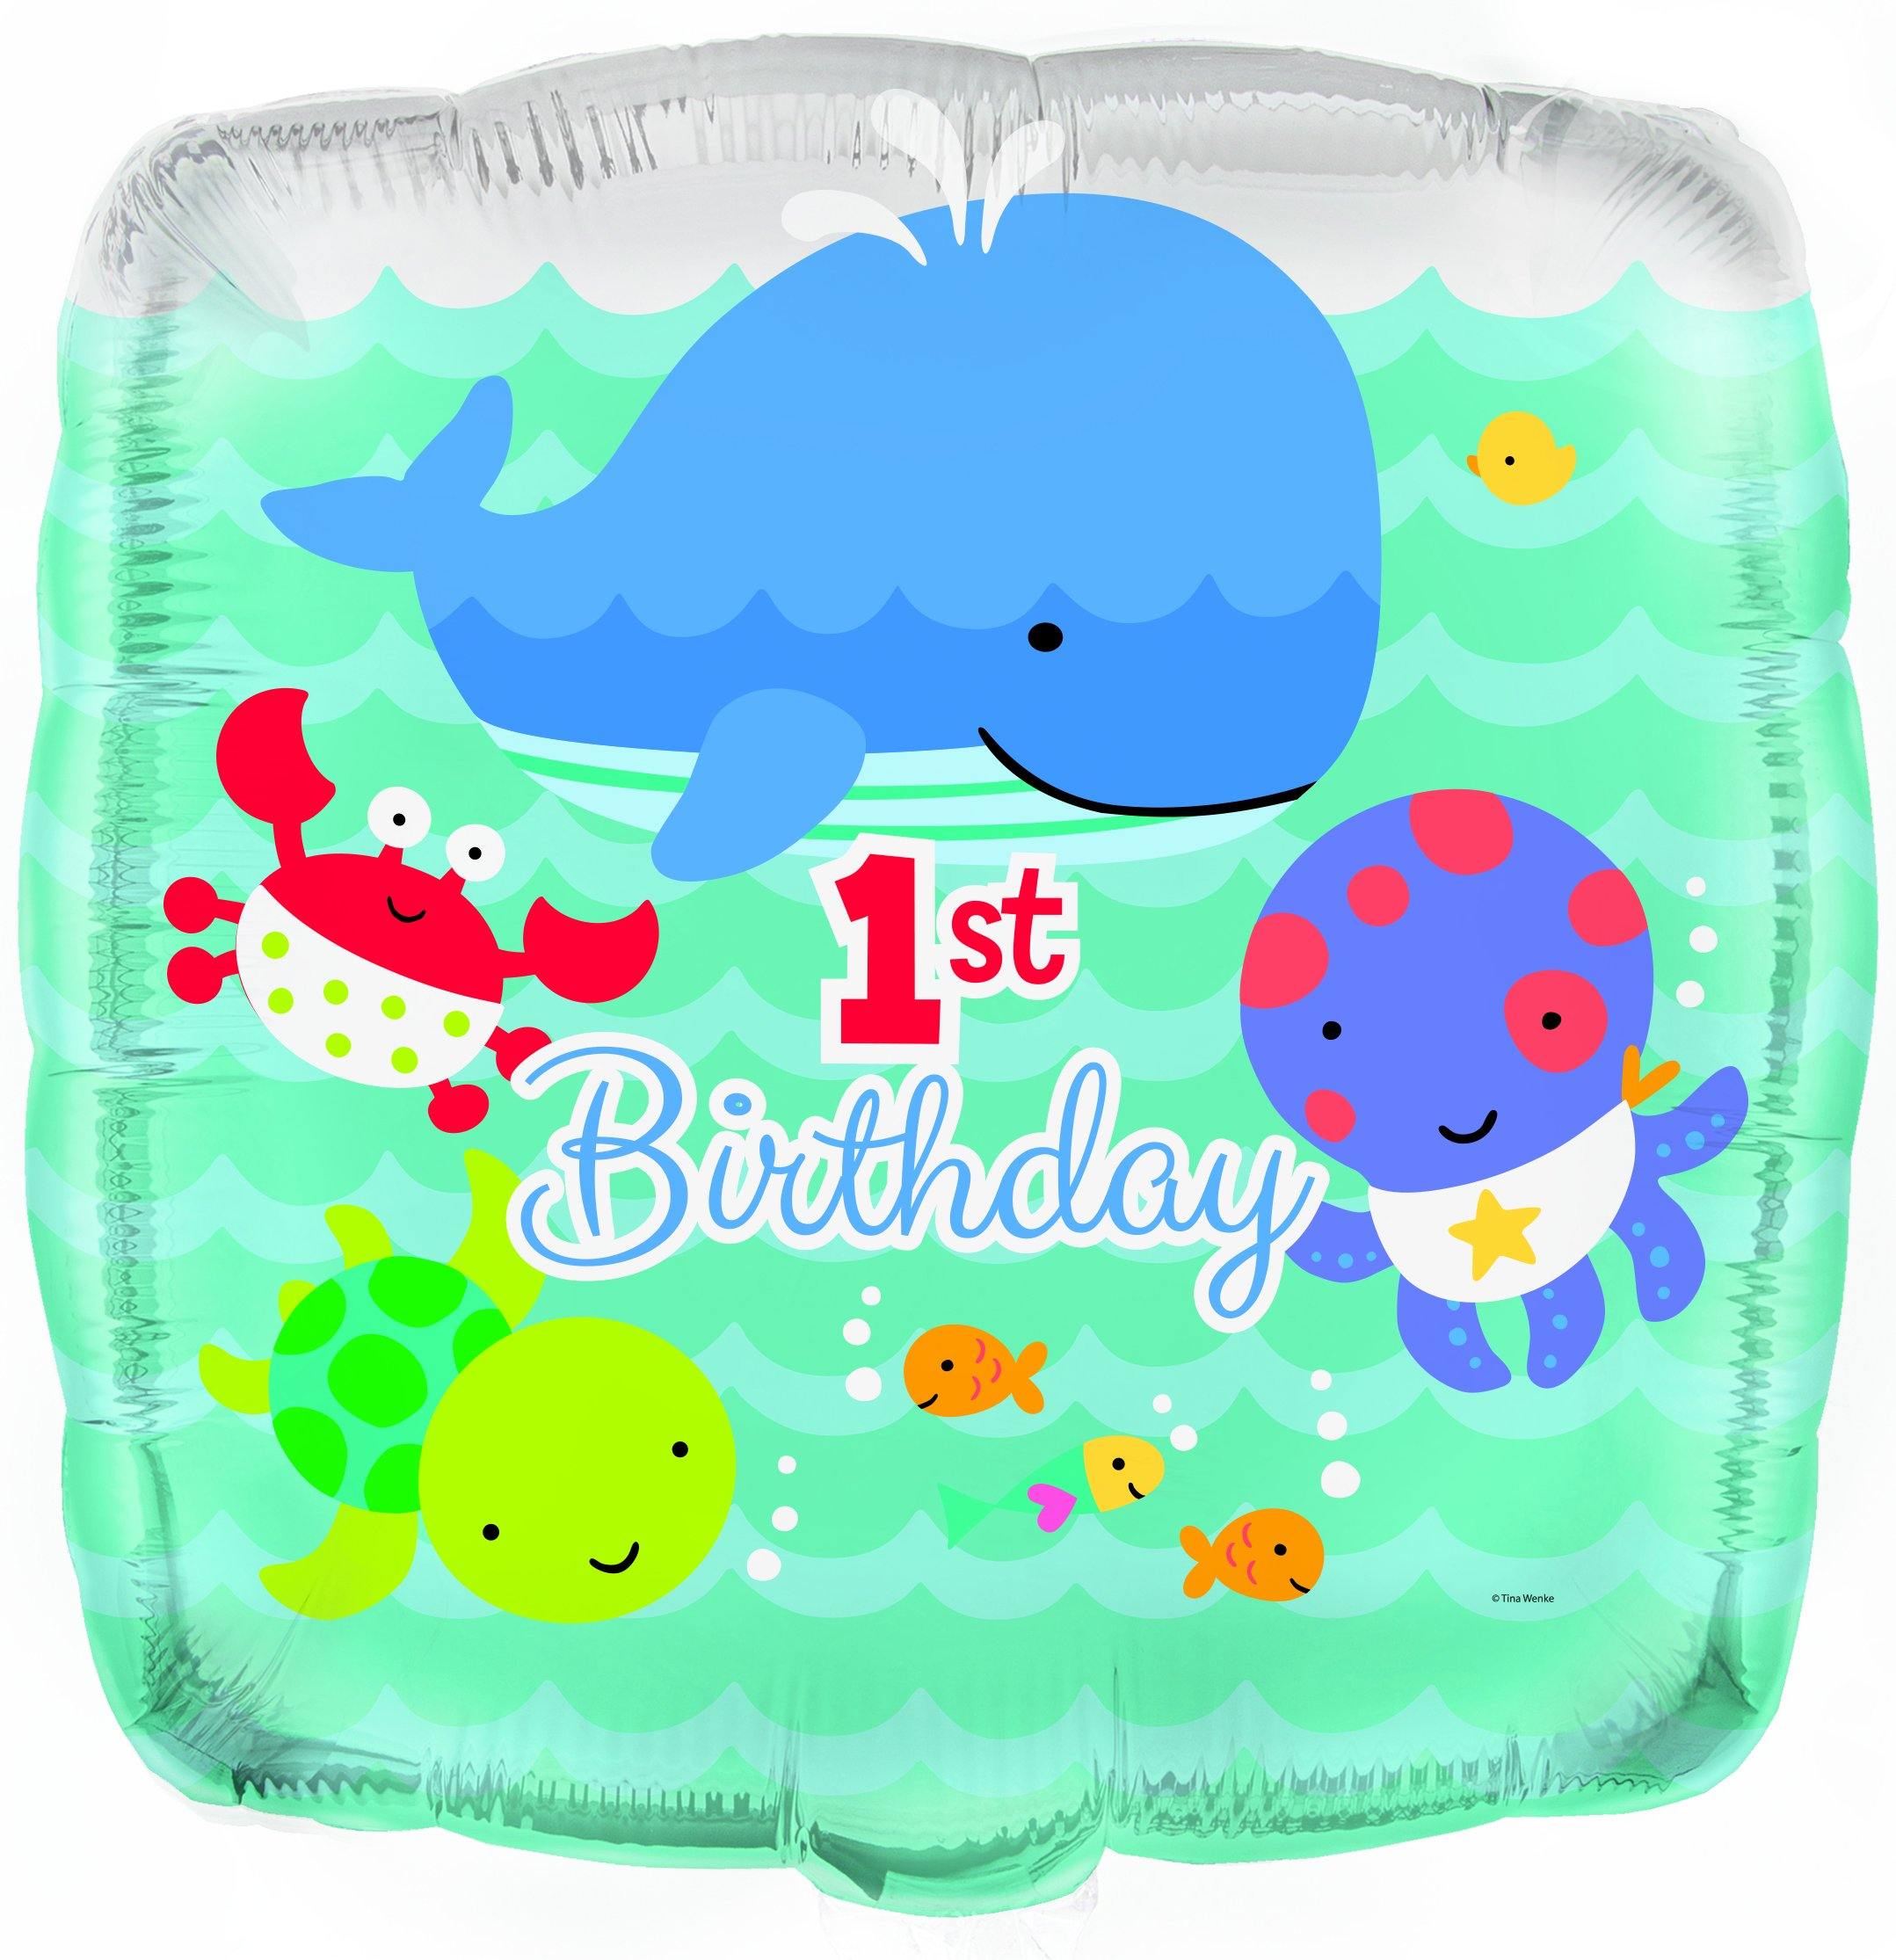 1st Birthday Under The Sea Square Foil Balloon - 45cm